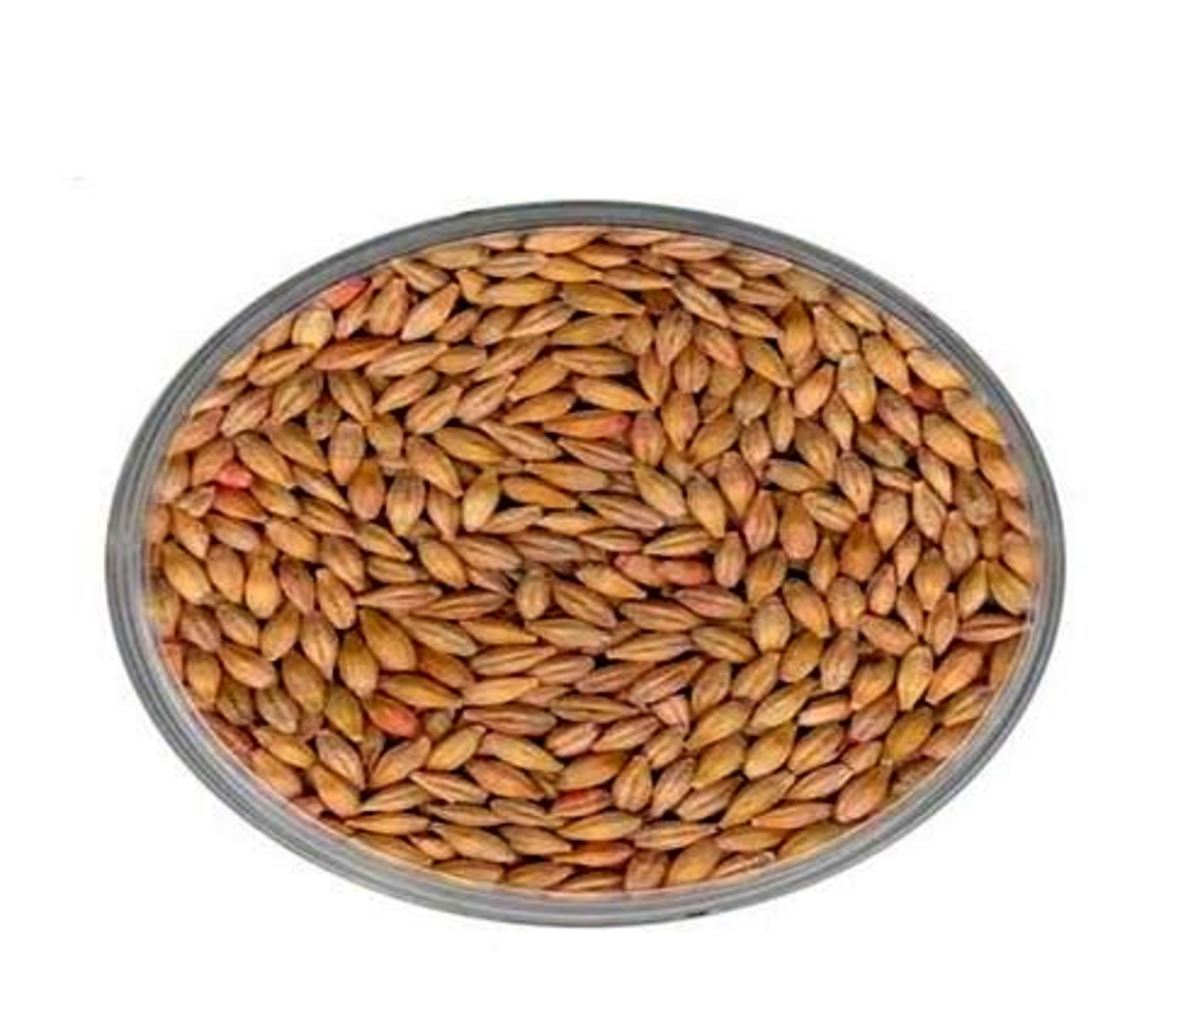 Uses and Health Benefits of Barley Grain